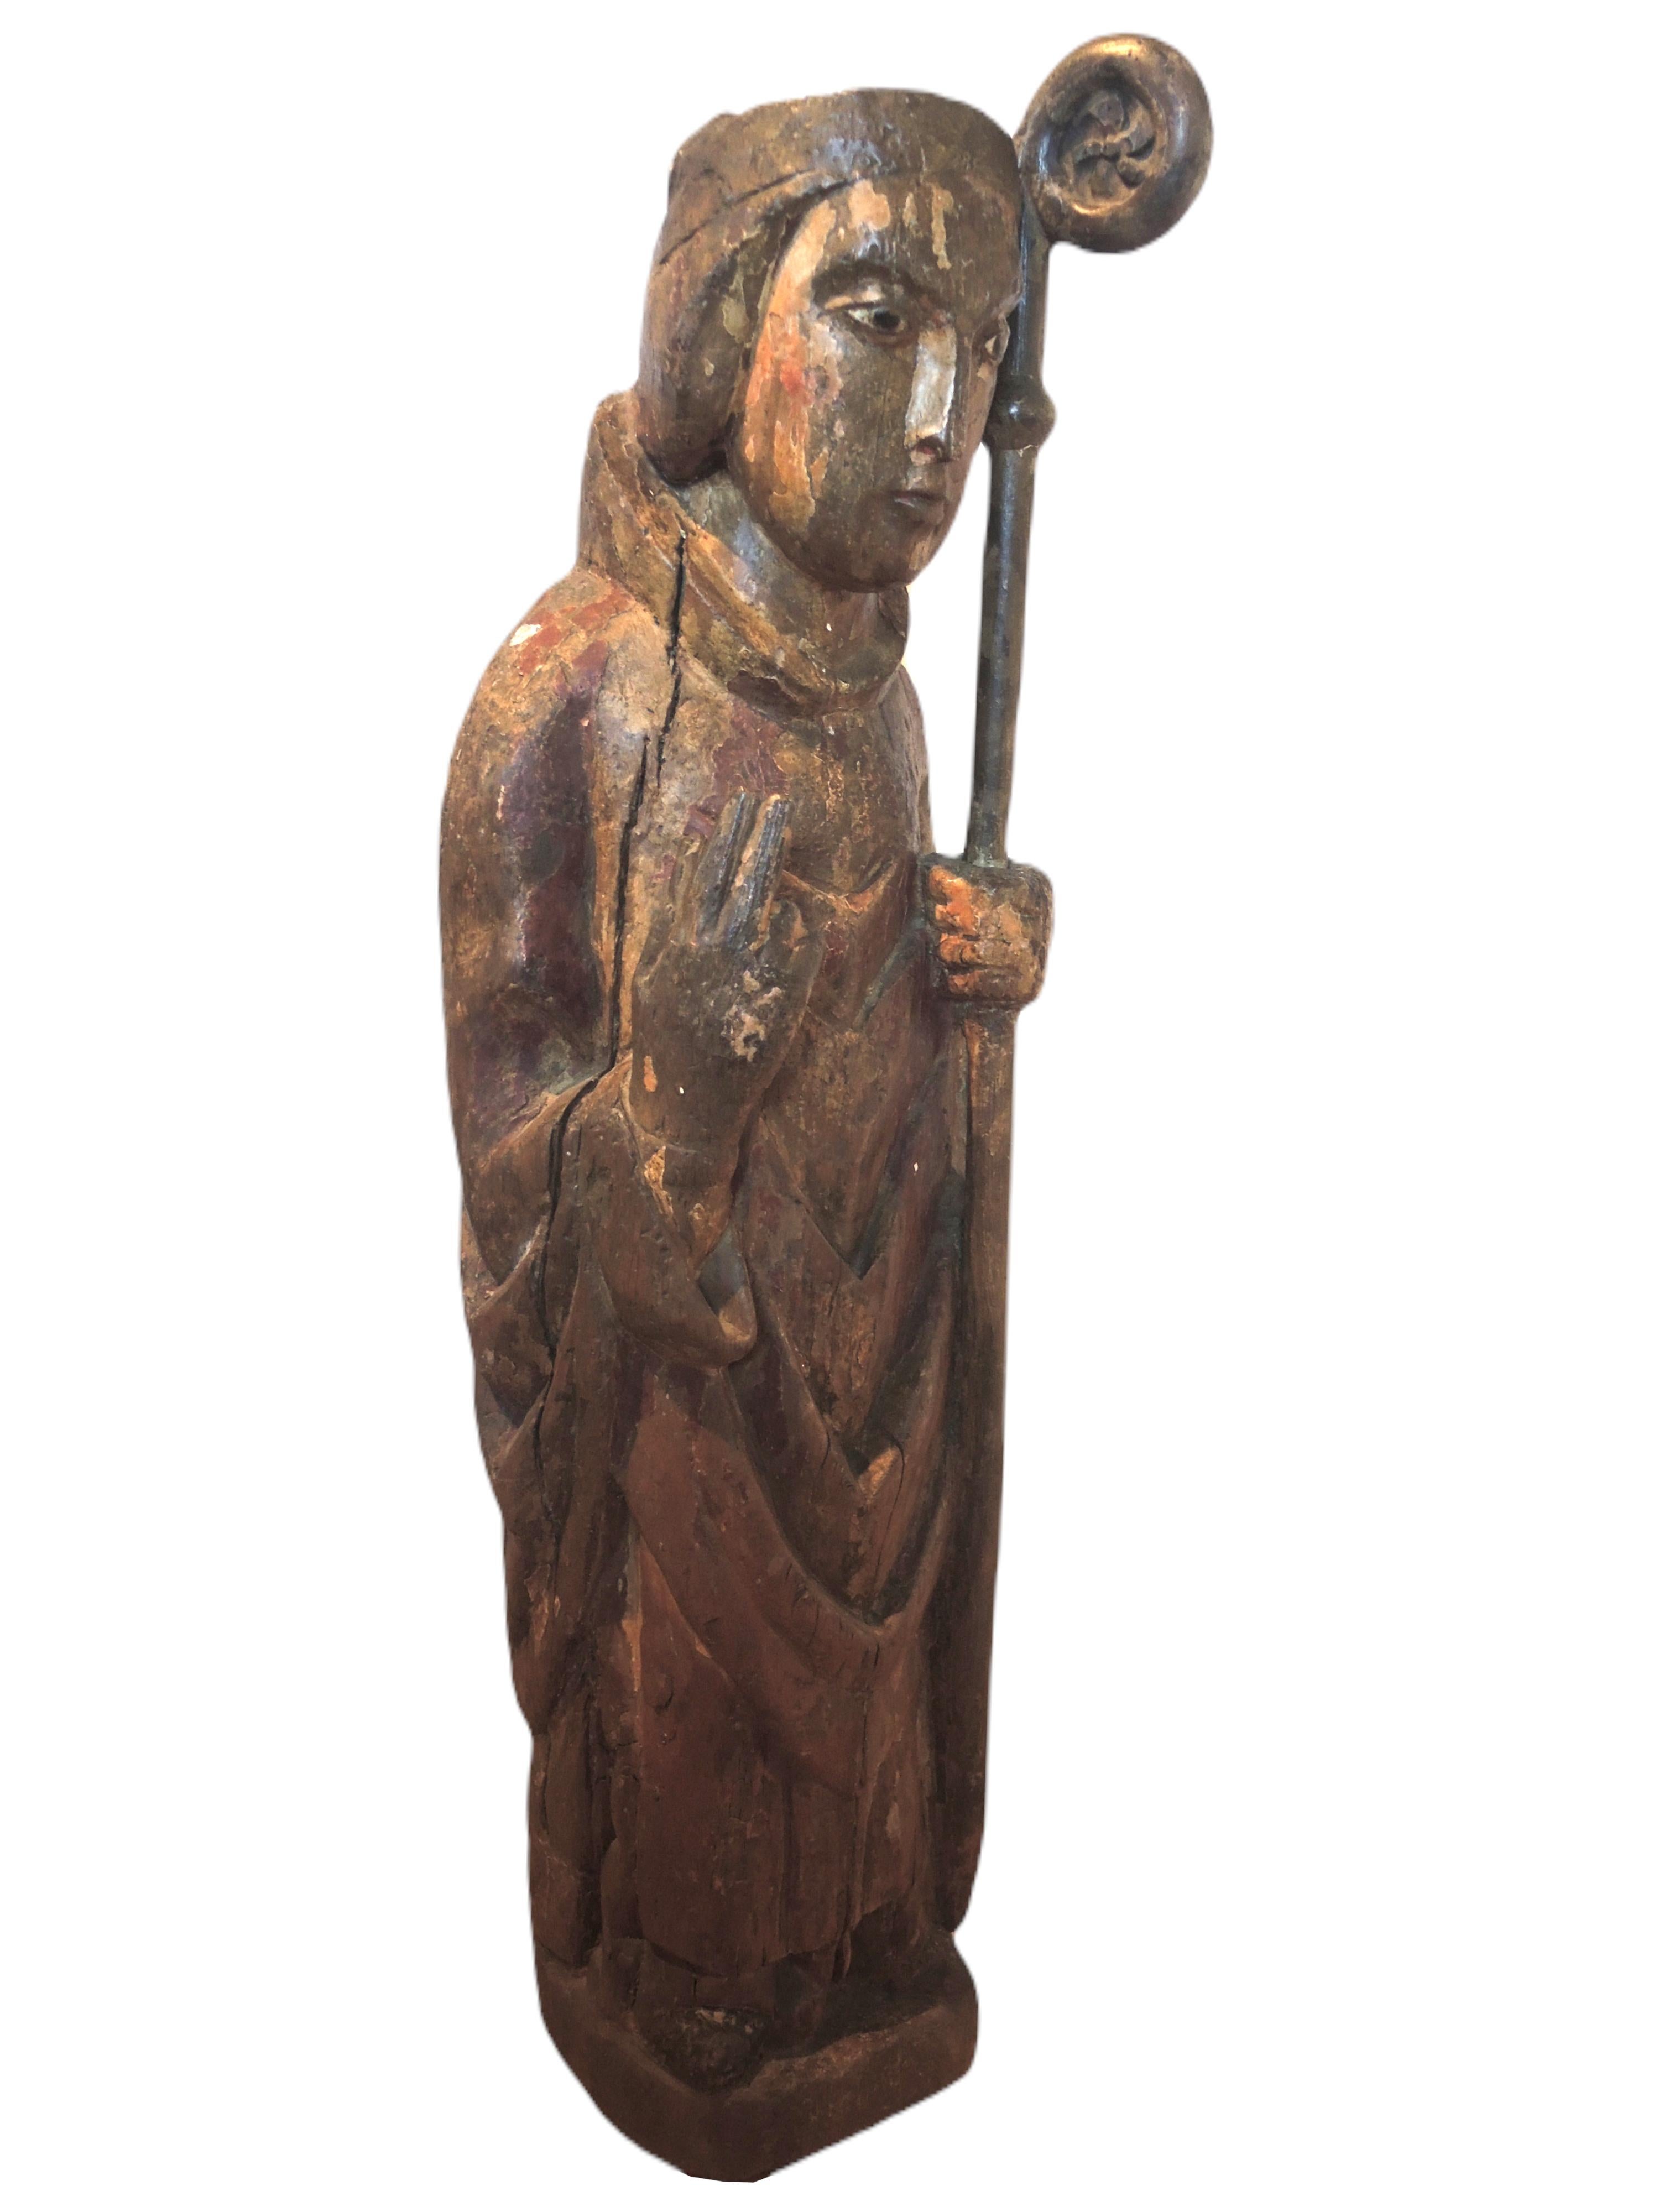 Unknown Figurative Sculpture - Catalan School of the 13th century. Wooden Bishop